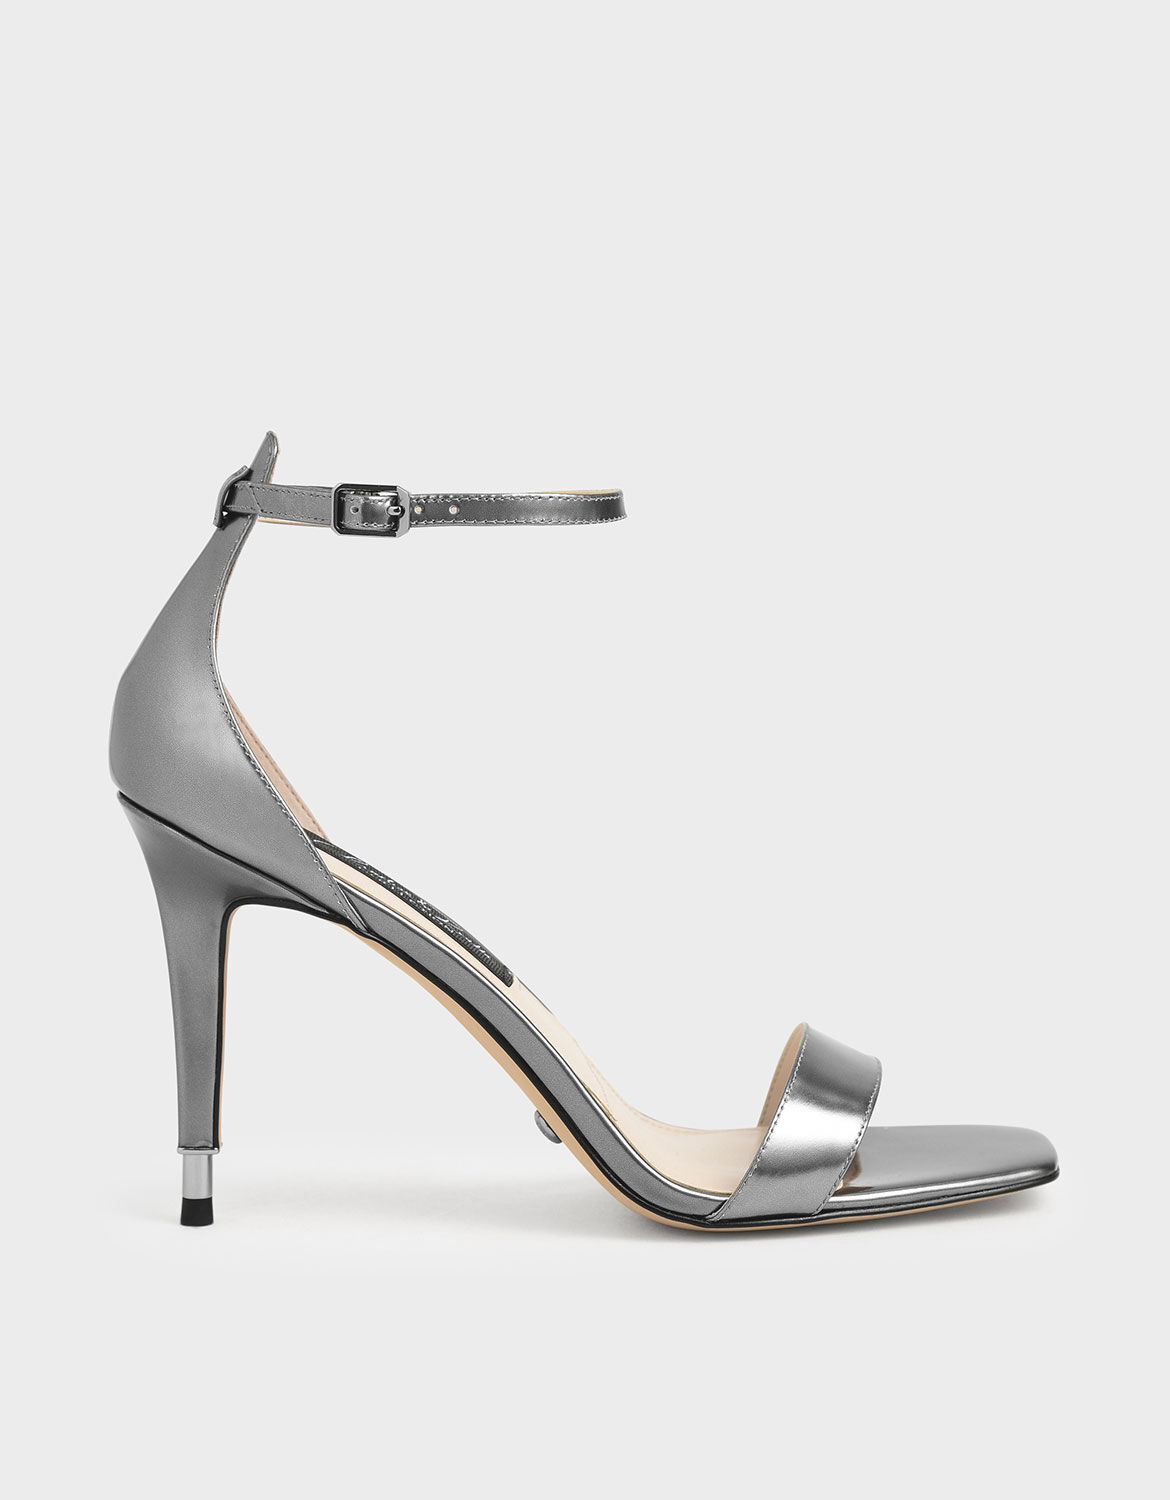 silver stiletto heels uk